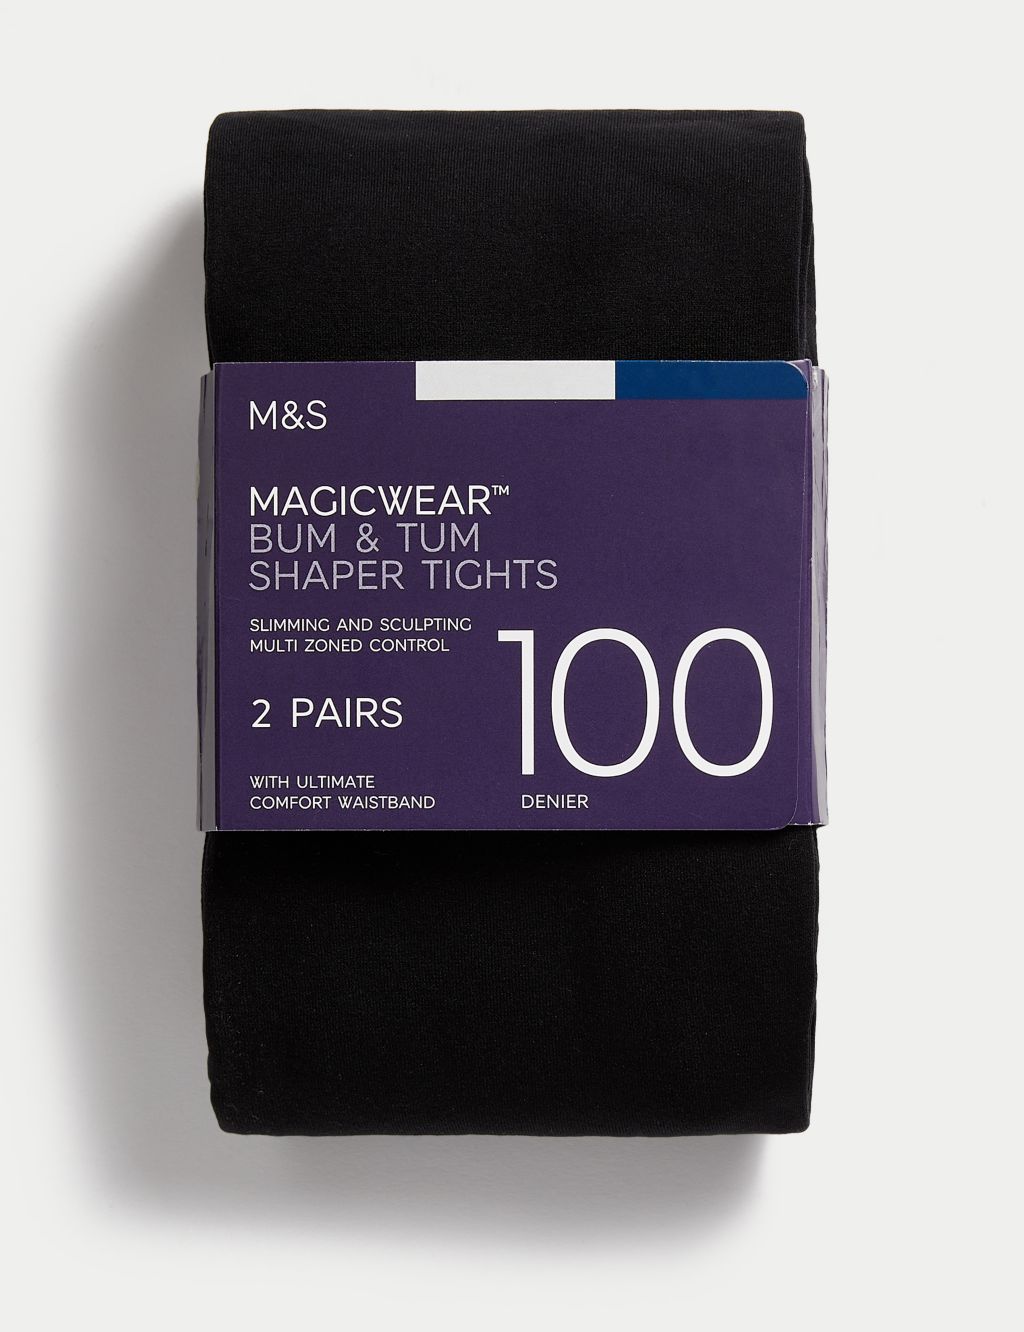 EX M&S MAGICWEAR Bum Tum And Thigh Shaper Shorts Tights- Black - Large  £4.00 - PicClick UK